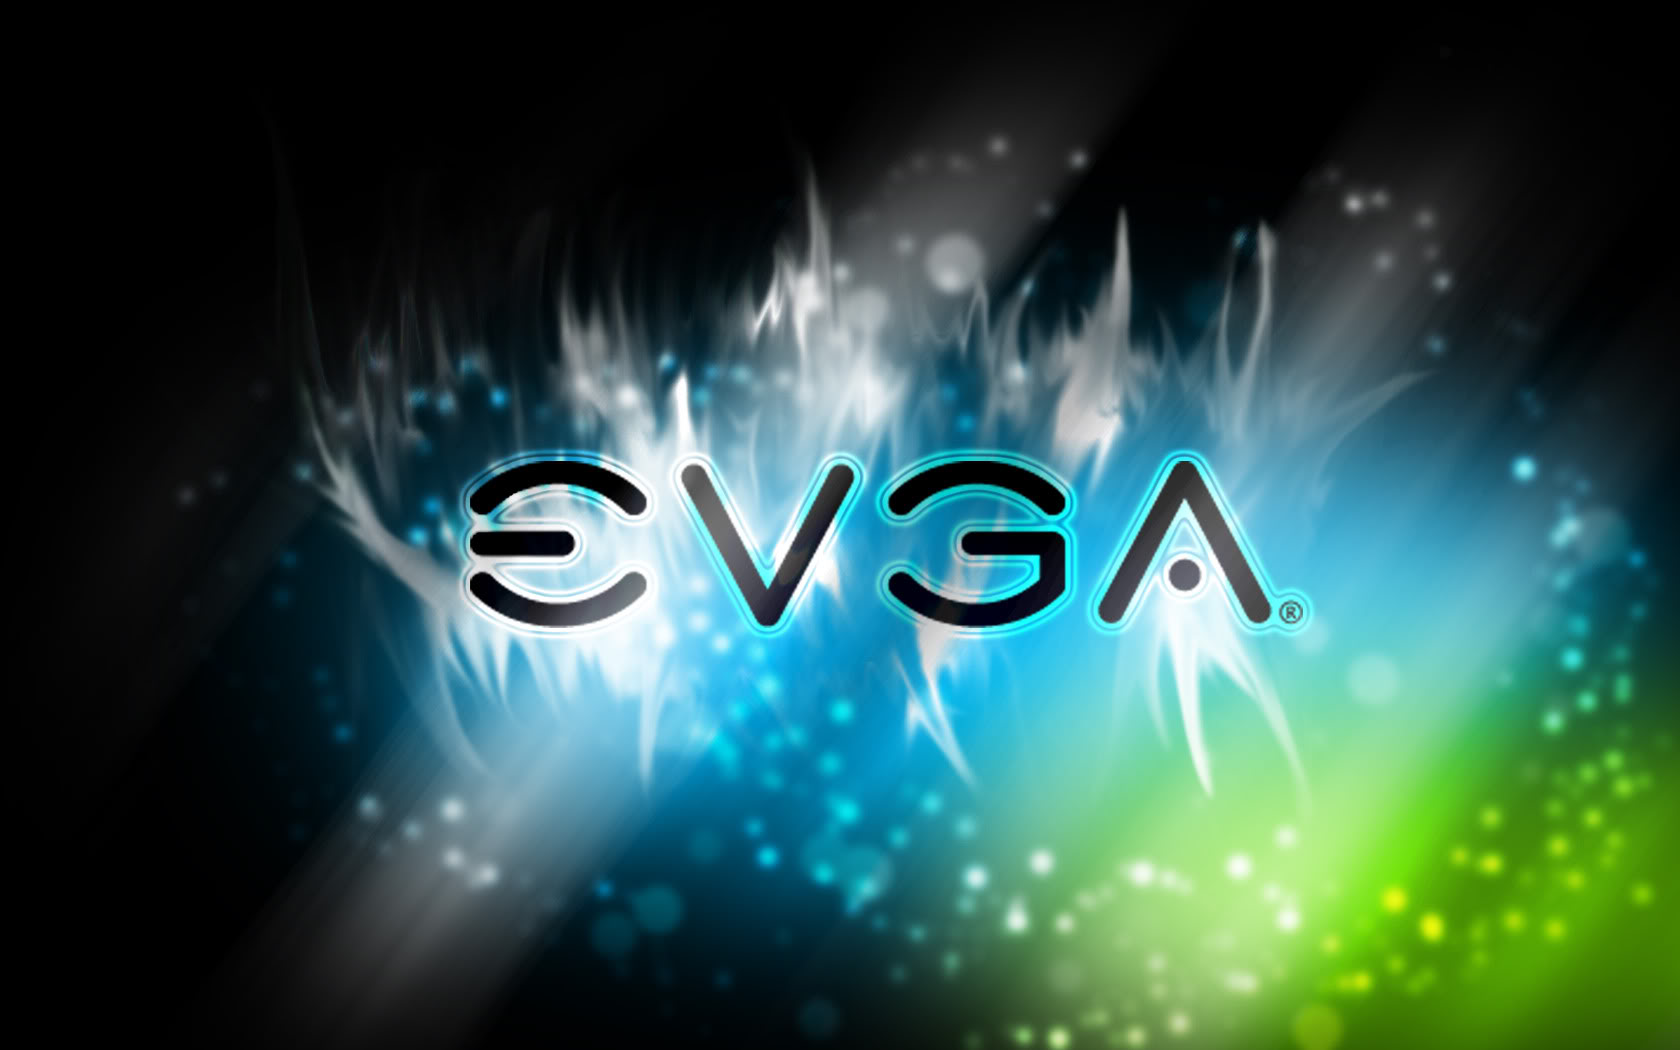 Evga Gaming Wallpaper